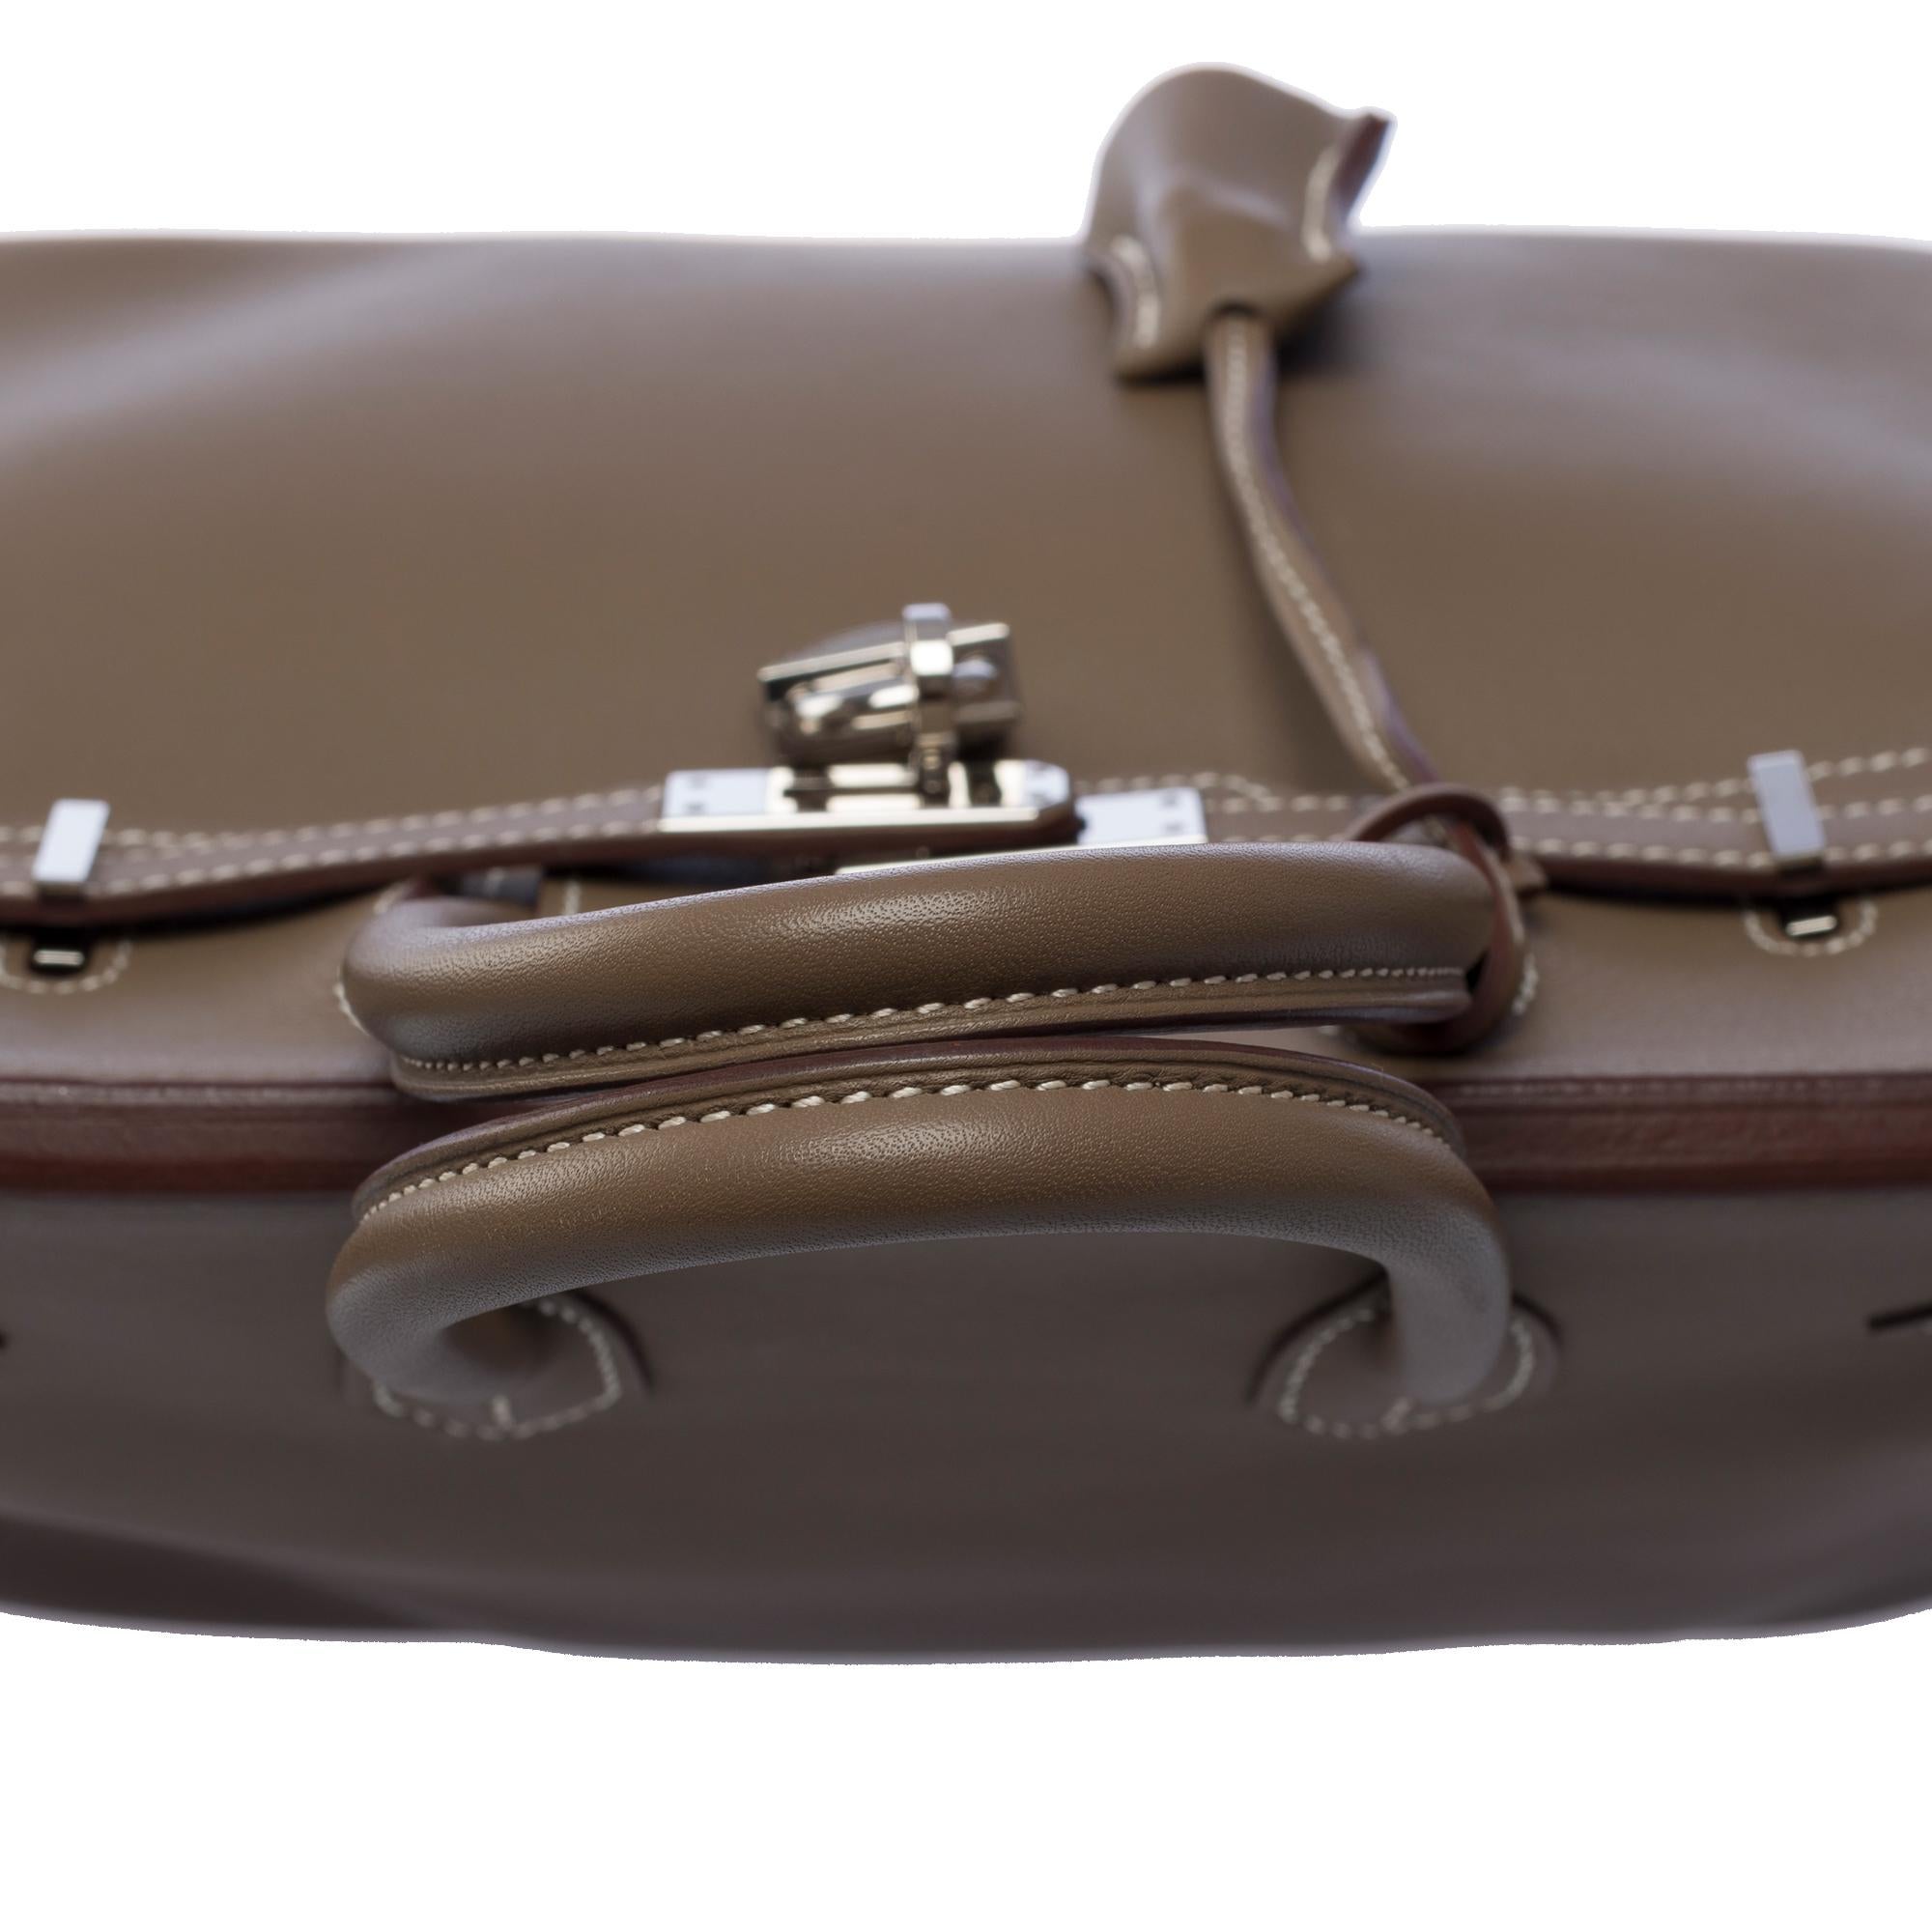 Amazing Hermes Birkin 25cm handbag in Etoupe Swift Calf leather, SHW 6